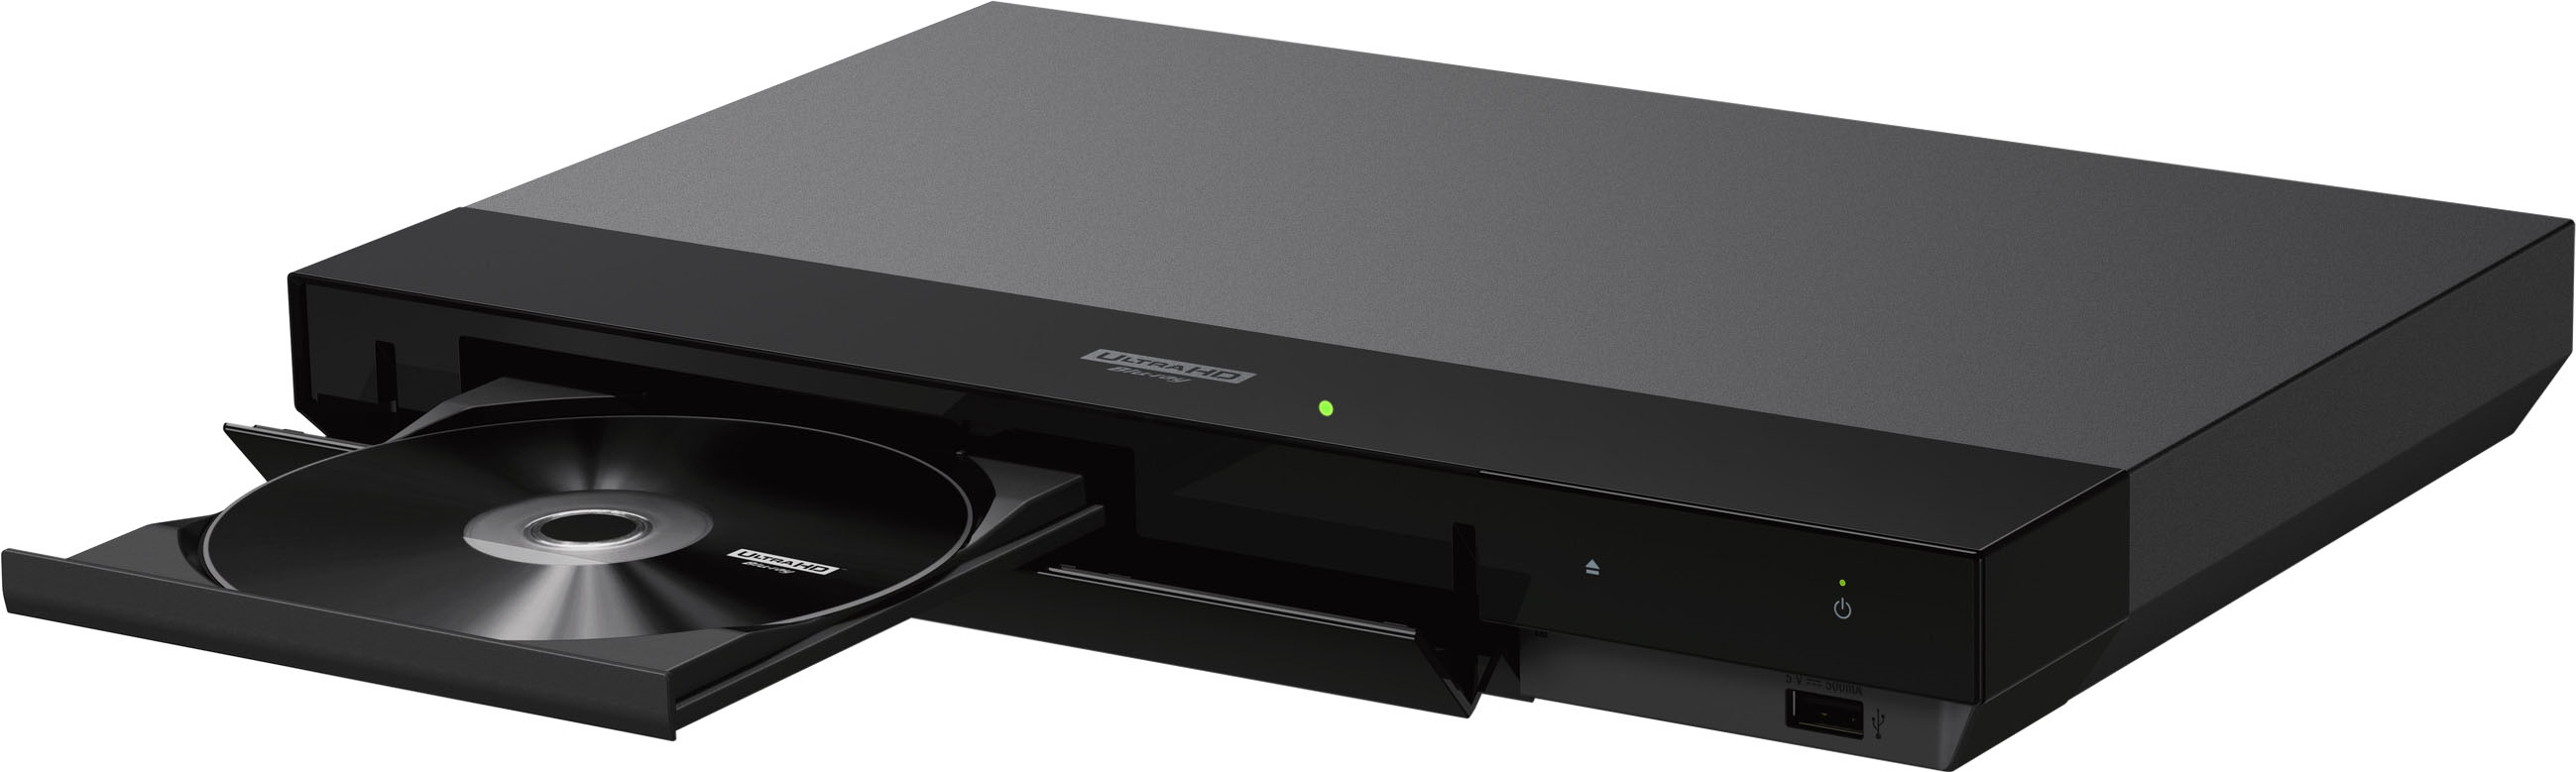 Sony UBP-X700/M Streaming 4K Ultra HD Blu-ray player with HDMI